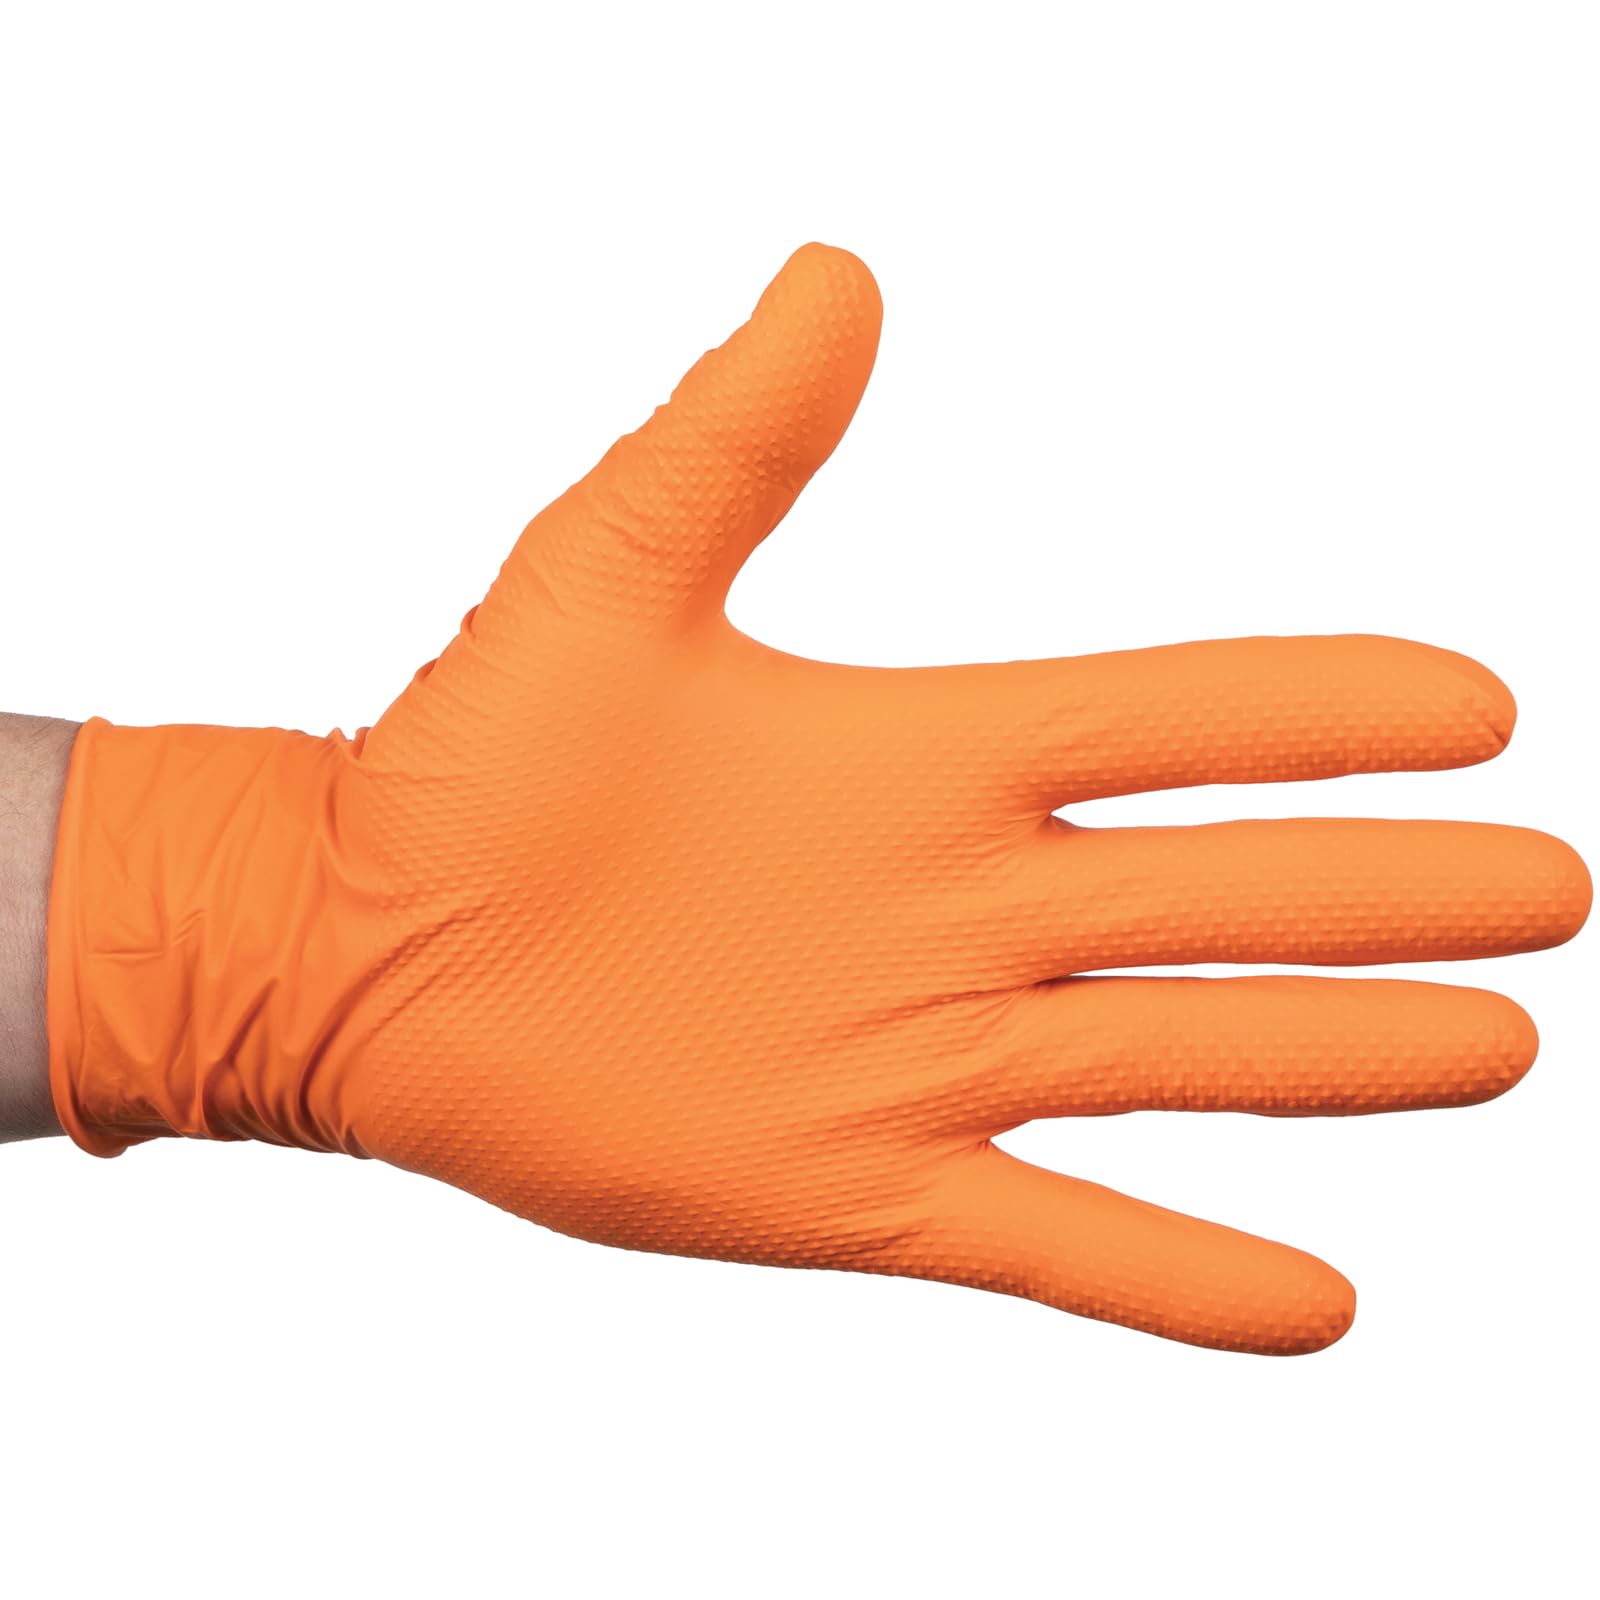 ForPro Heavy Duty Disposable Nitrile Gloves, Orange, 8 Mil, Industrial Grade, Raised Diamond Grip, Latex-Free, 100-Count